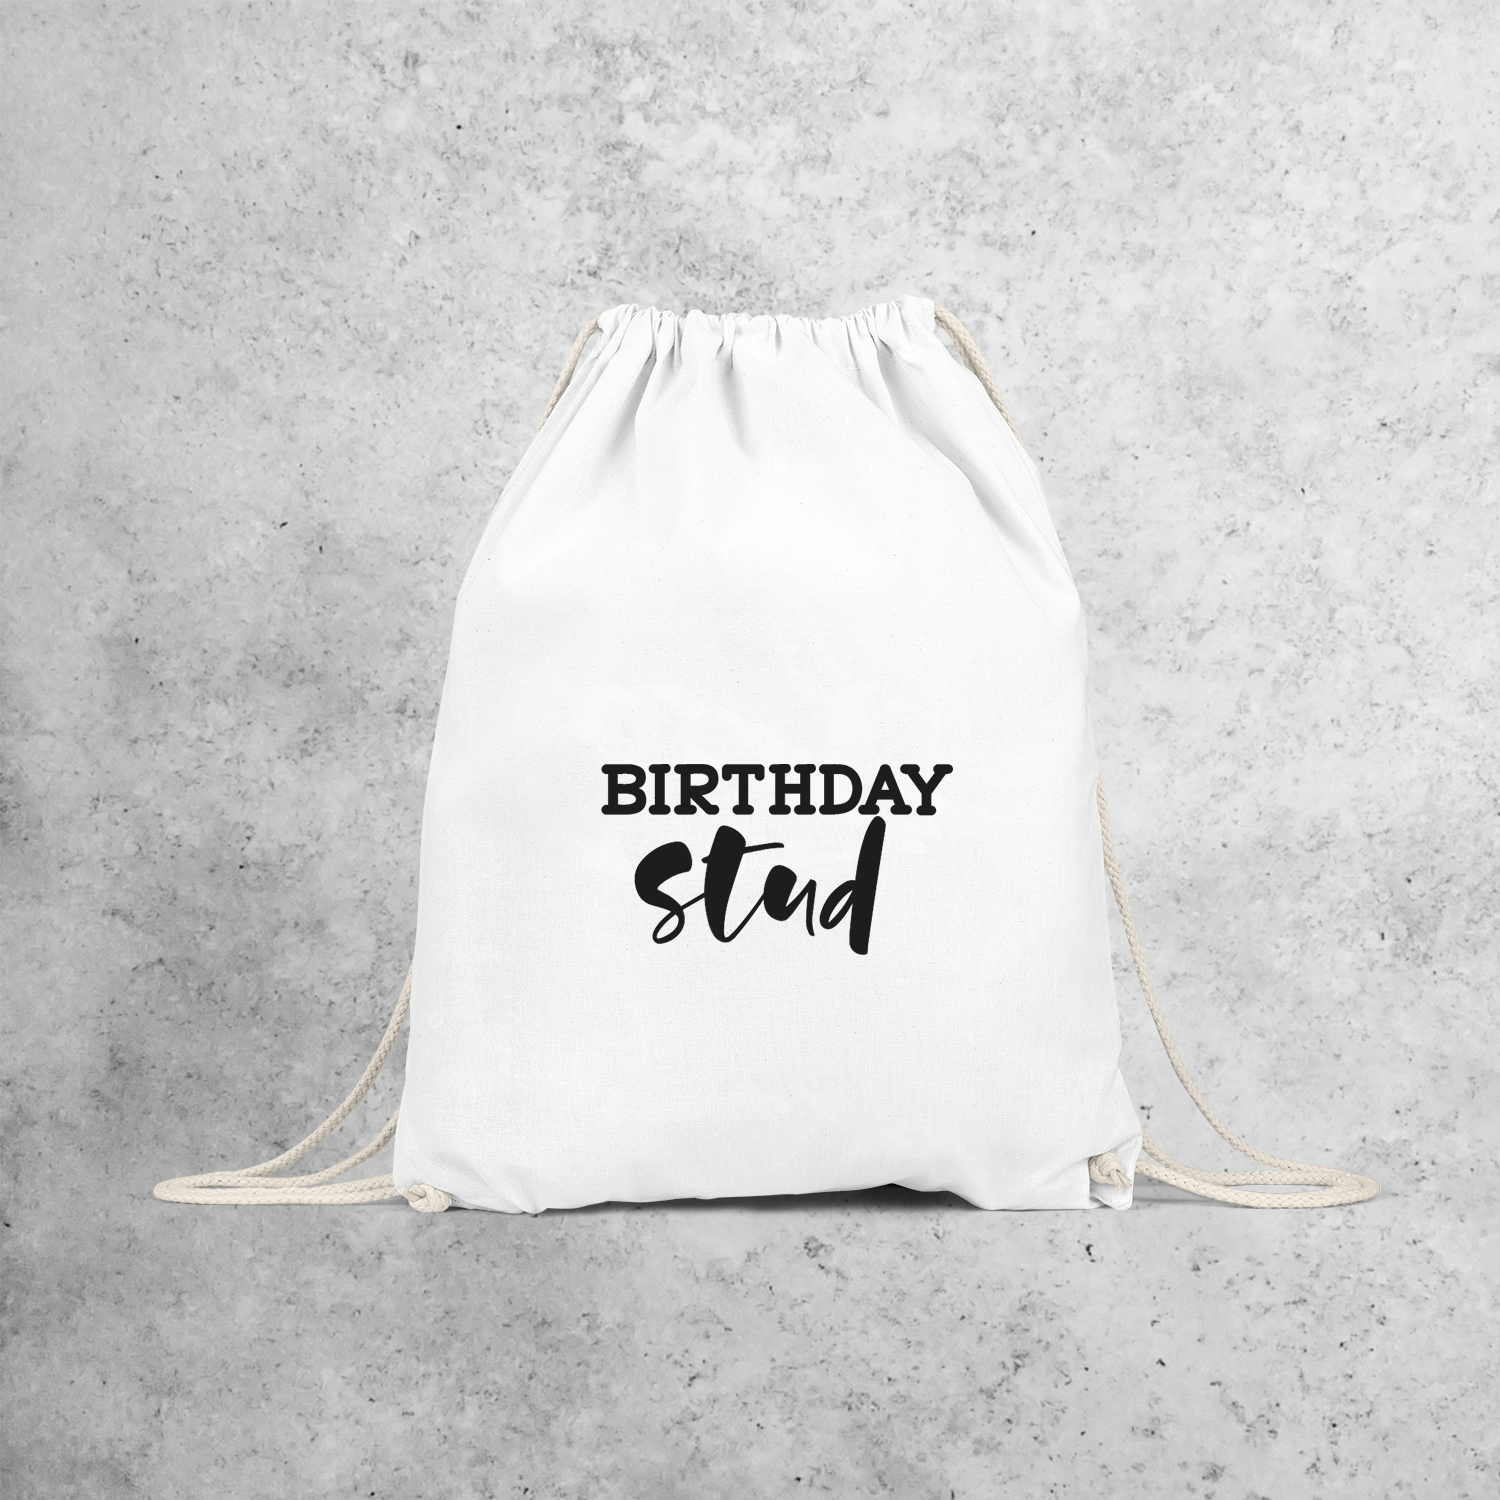 'Birthday stud' backpack